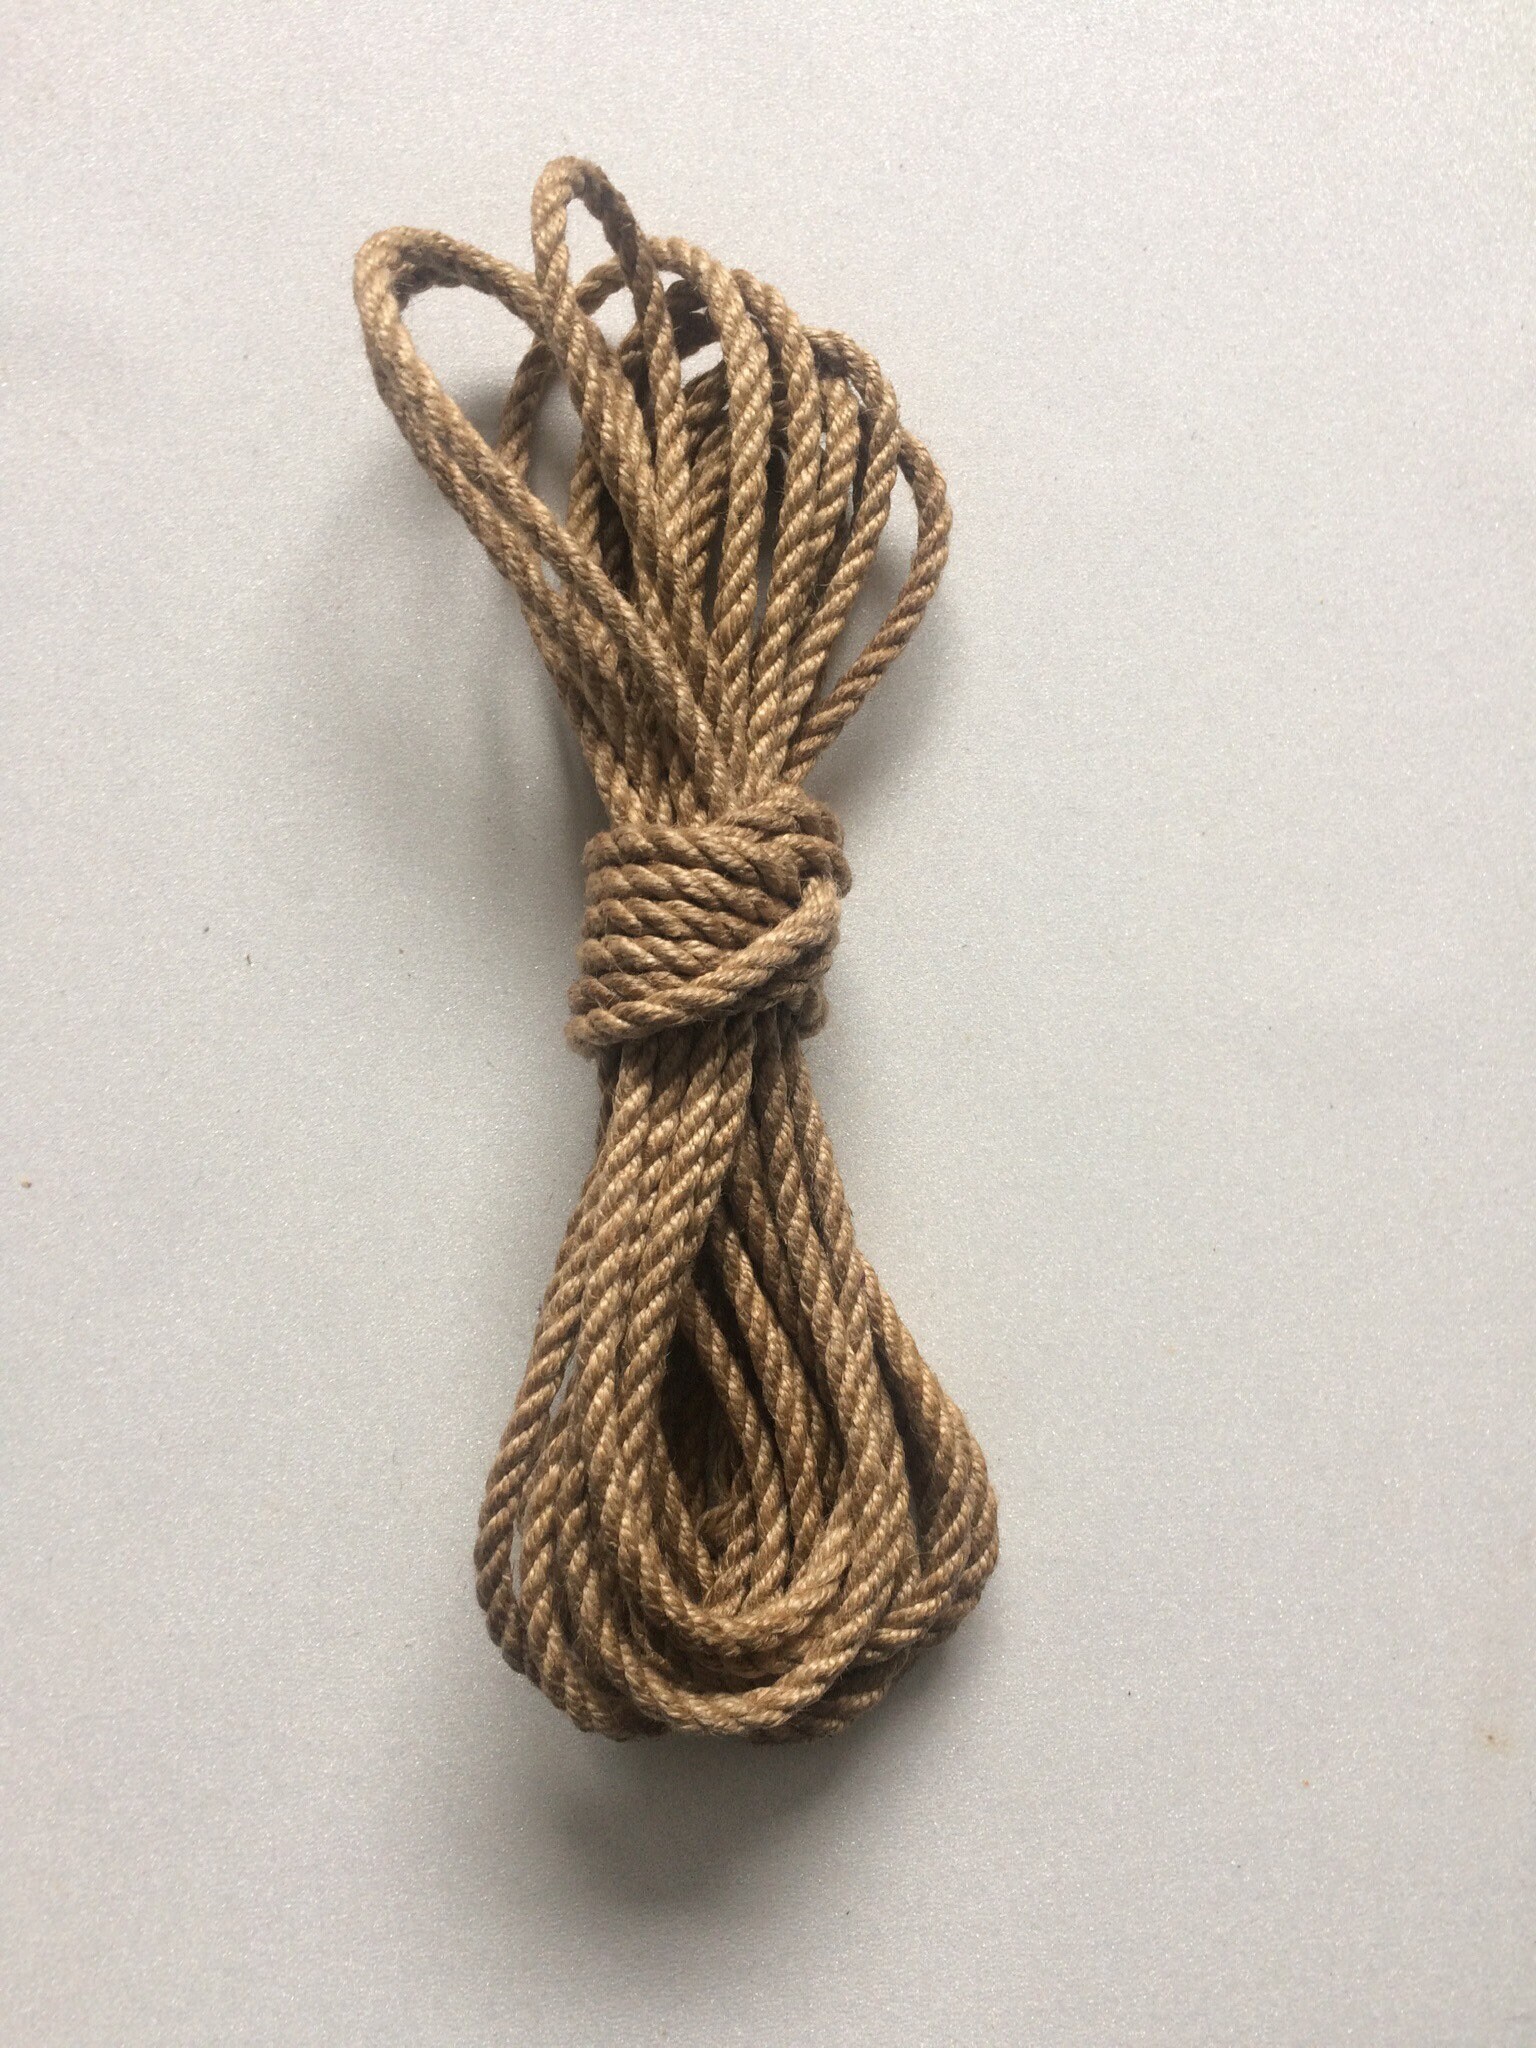 Jute Bondage Rope Shibari Rope Booster Kit Mature